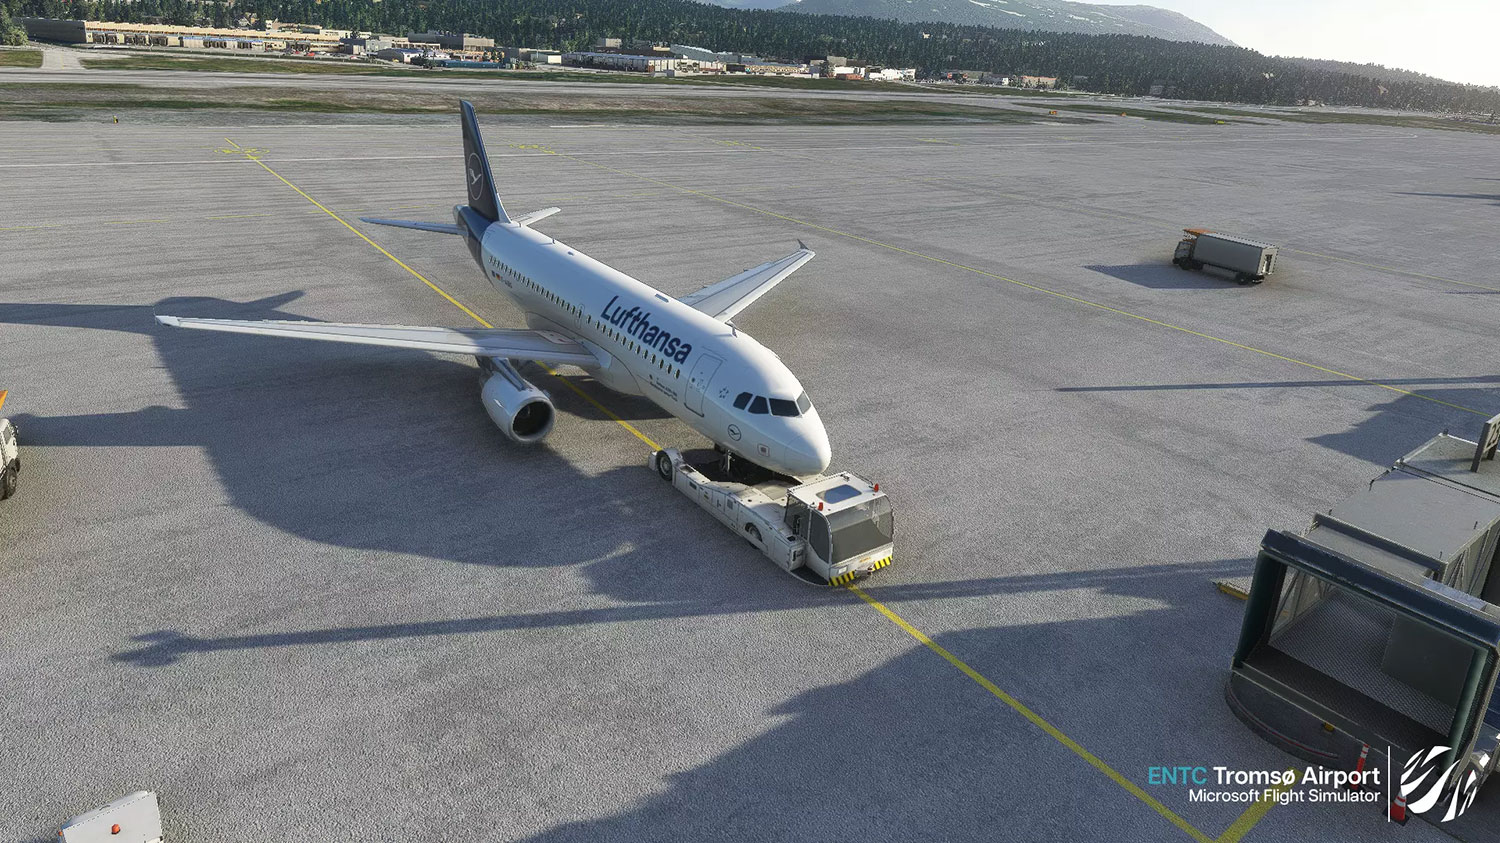 M'M Simulations - ENTC - Tromsø Airport